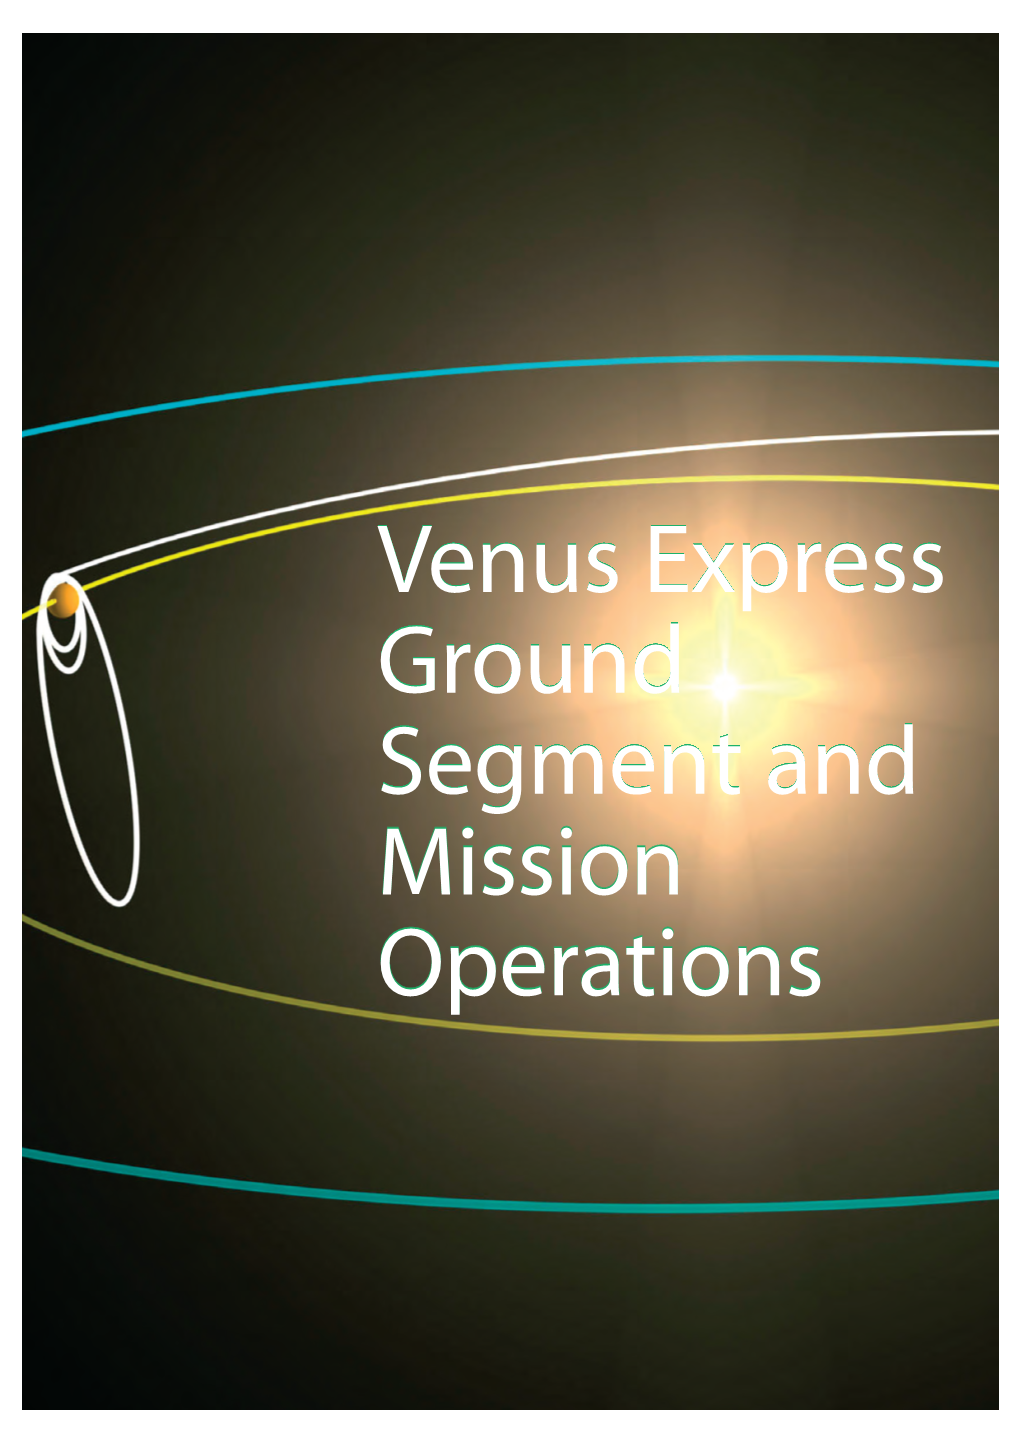 Venus Express Ground Segment and Mission Operations Venus Express